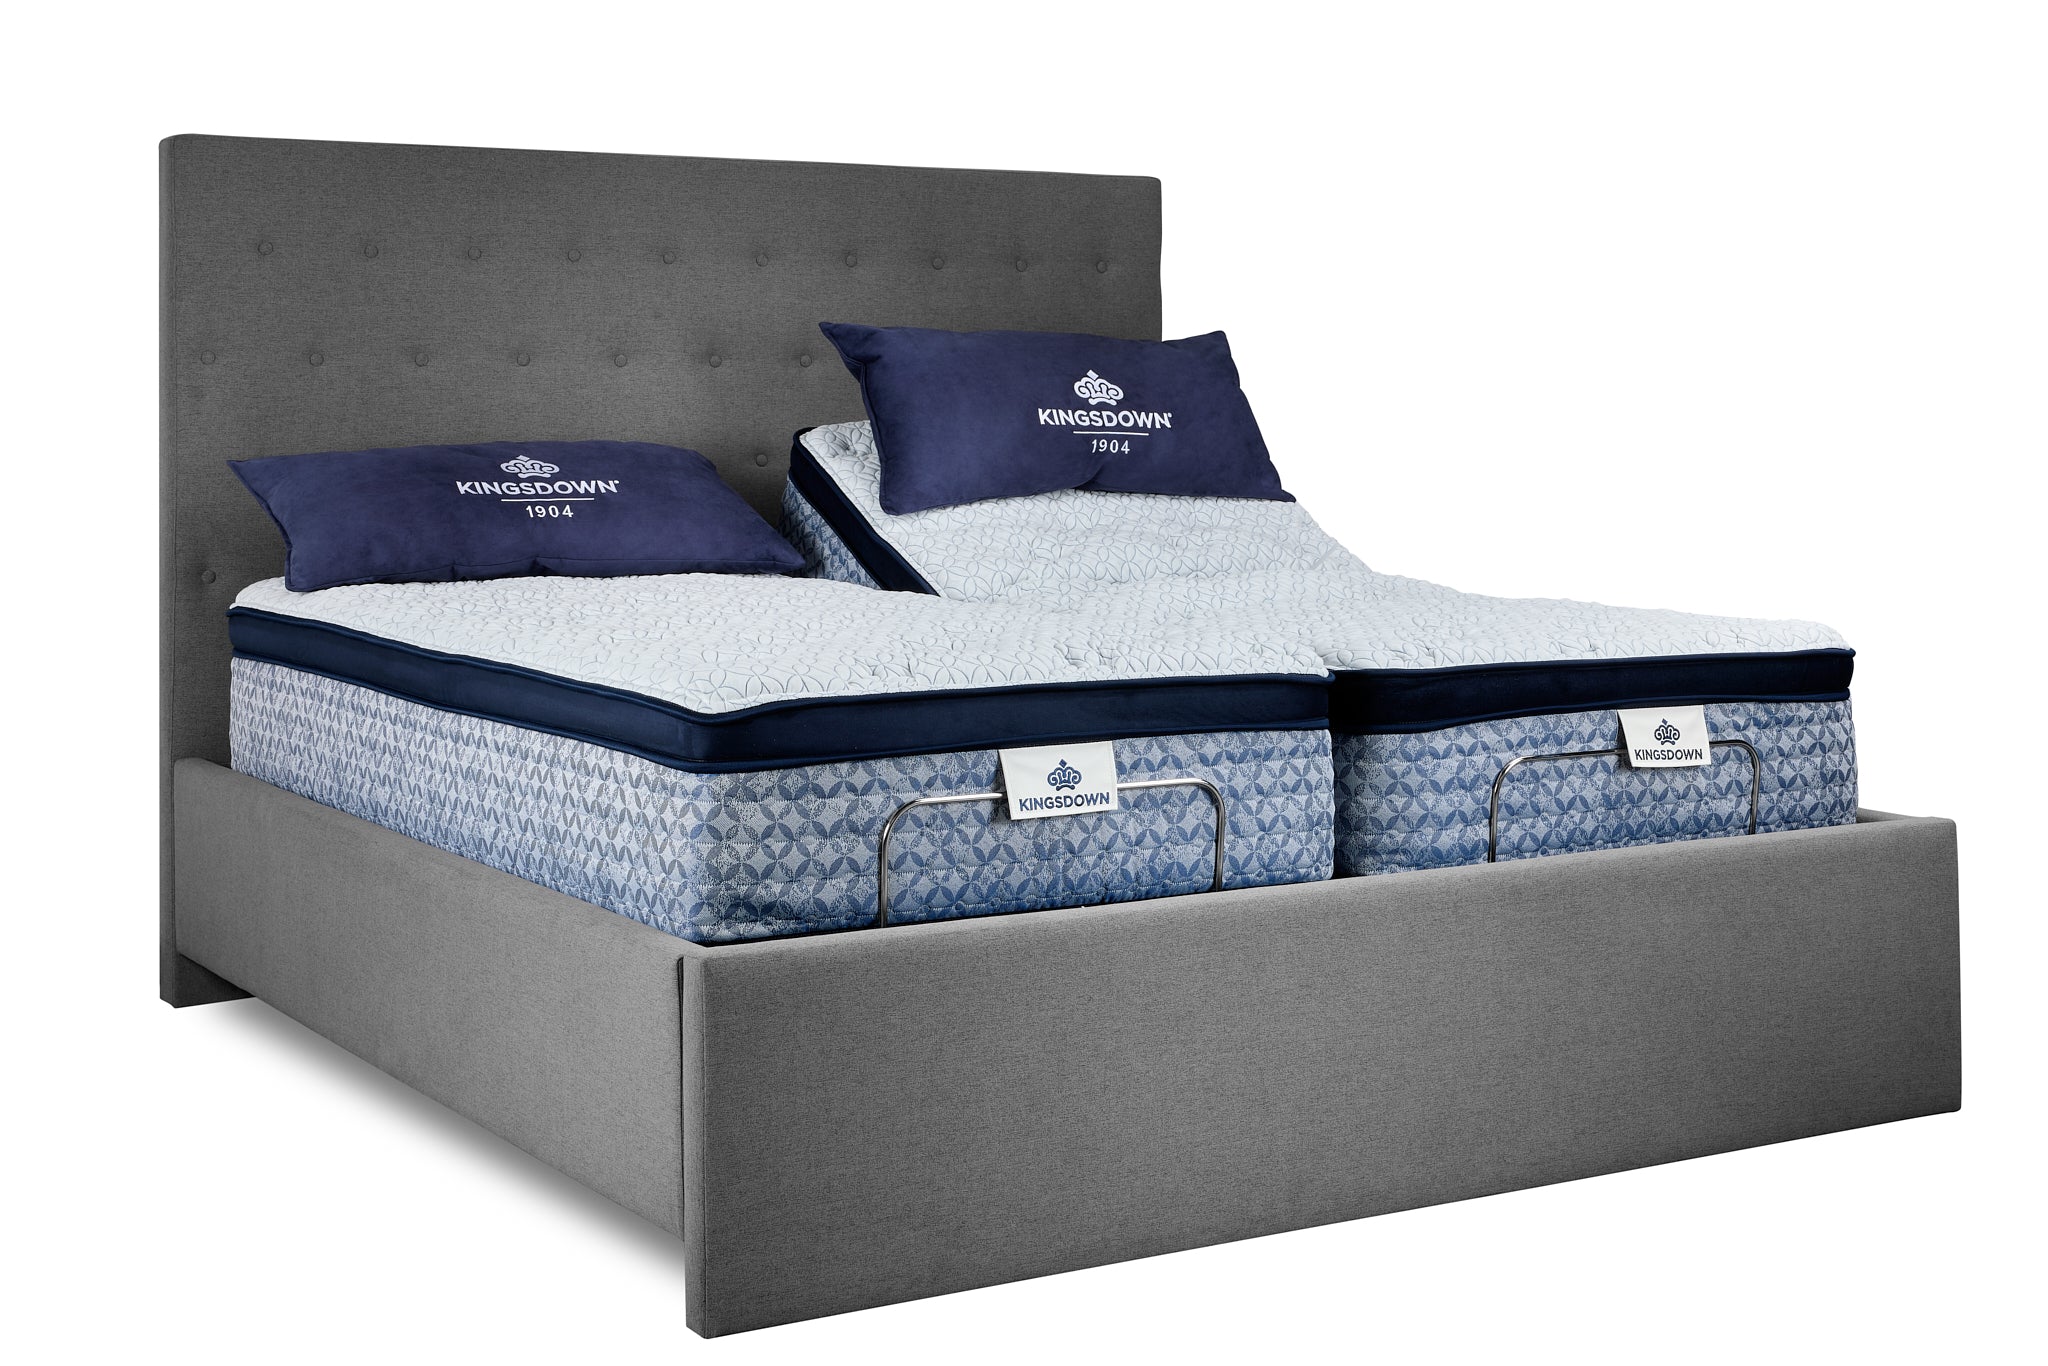 Kingsdown Baroness Split King Adjustable Bed